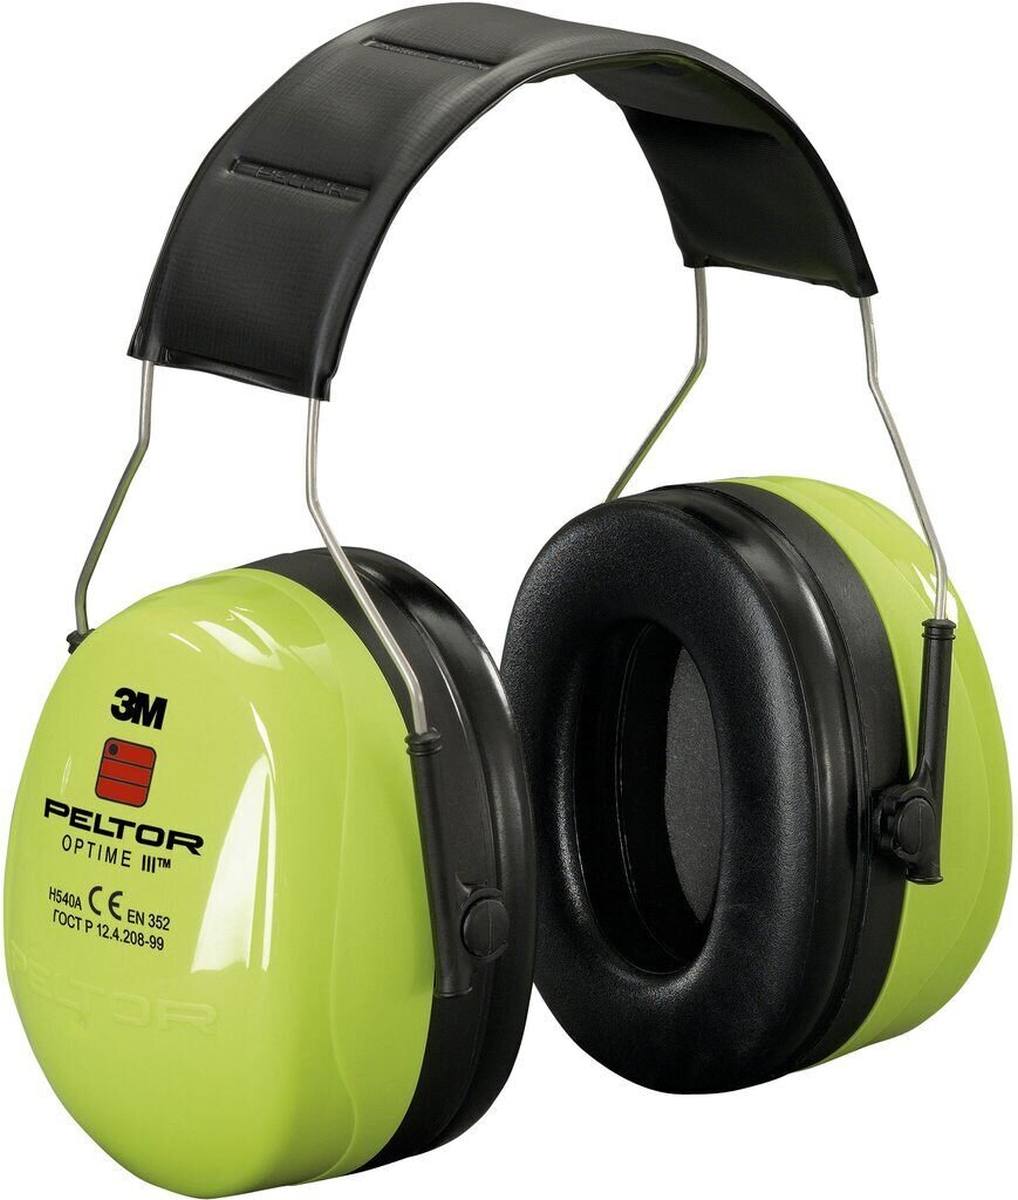 3M PELTOR Optime III ear muffs, Hi-Viz headband, high visibility, SNR=35 dB, H540AV